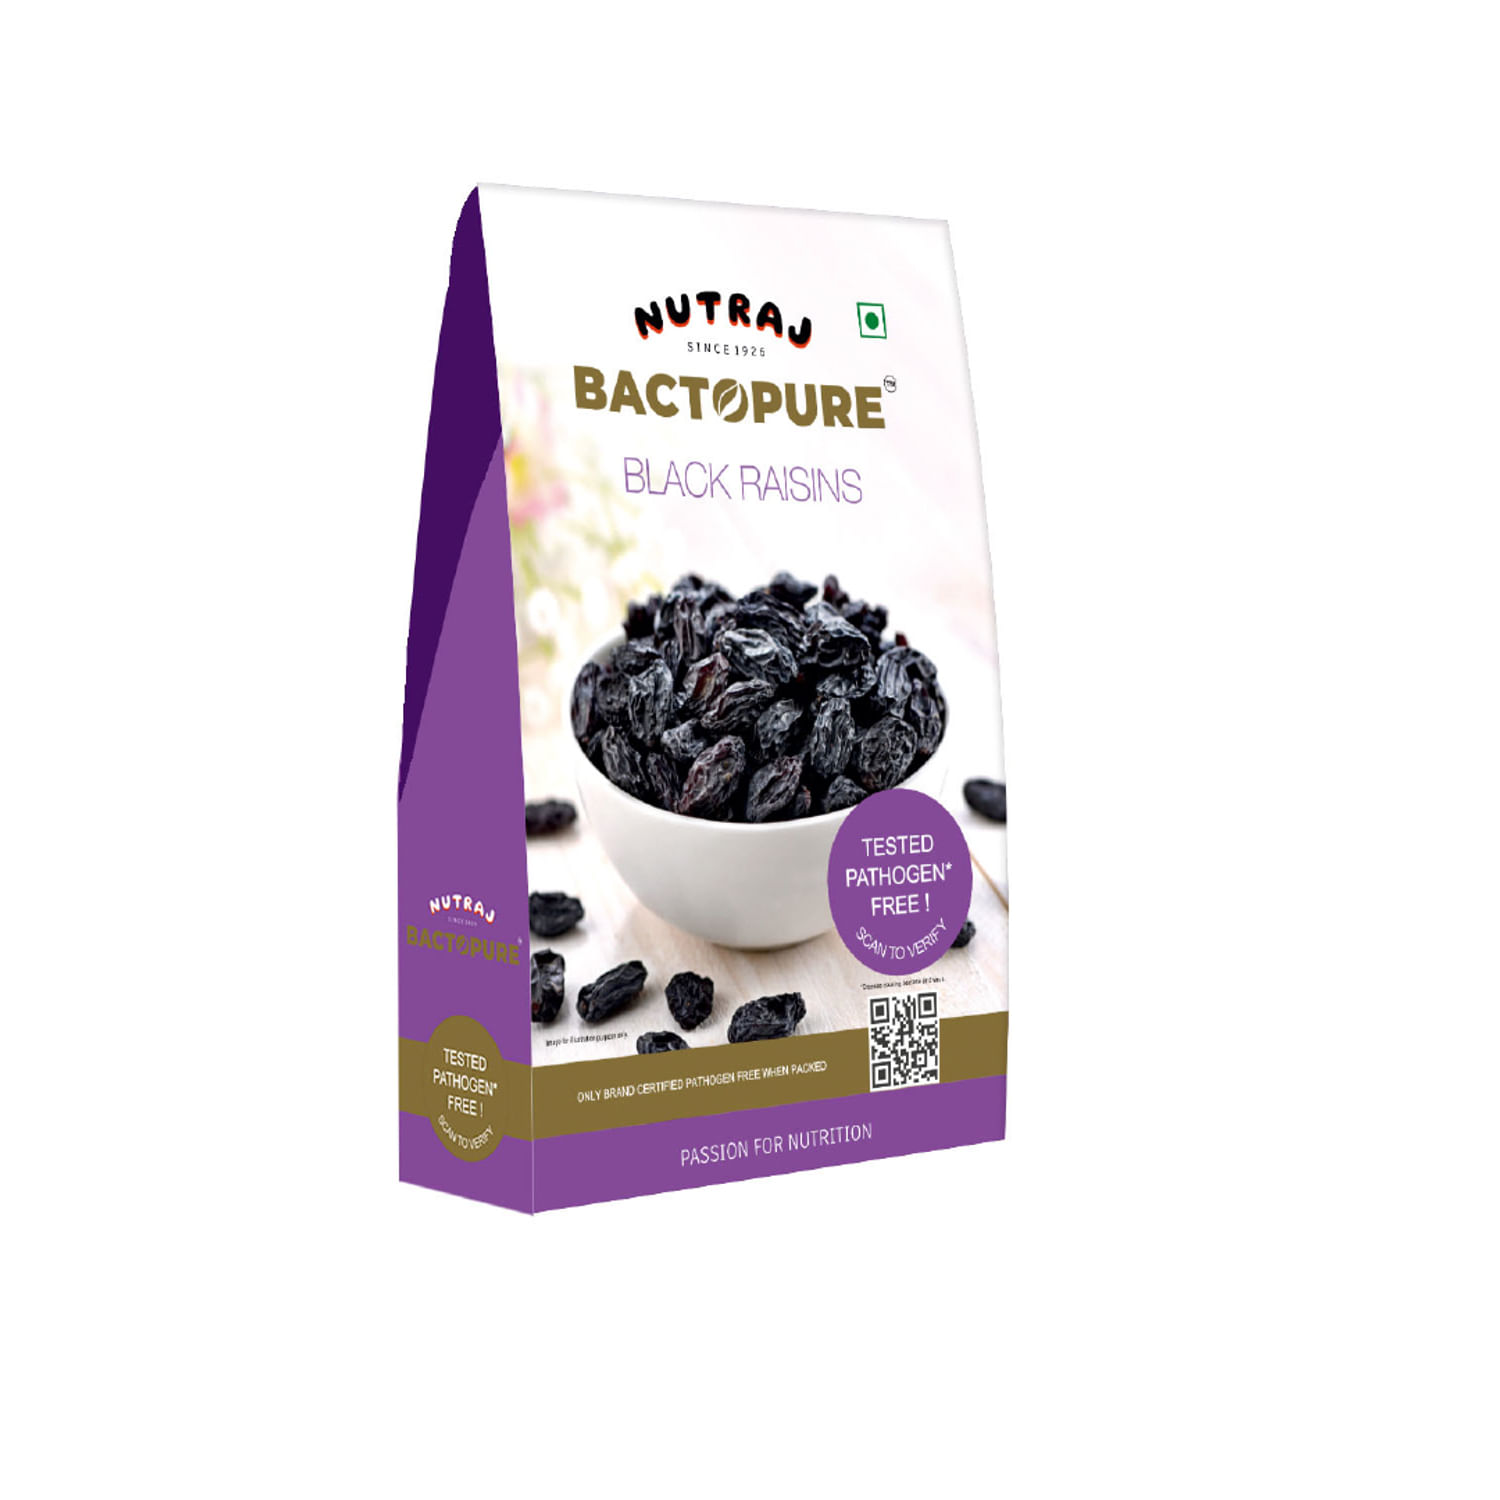 Bactopure Raisins Black 250 gm - Pack of 2